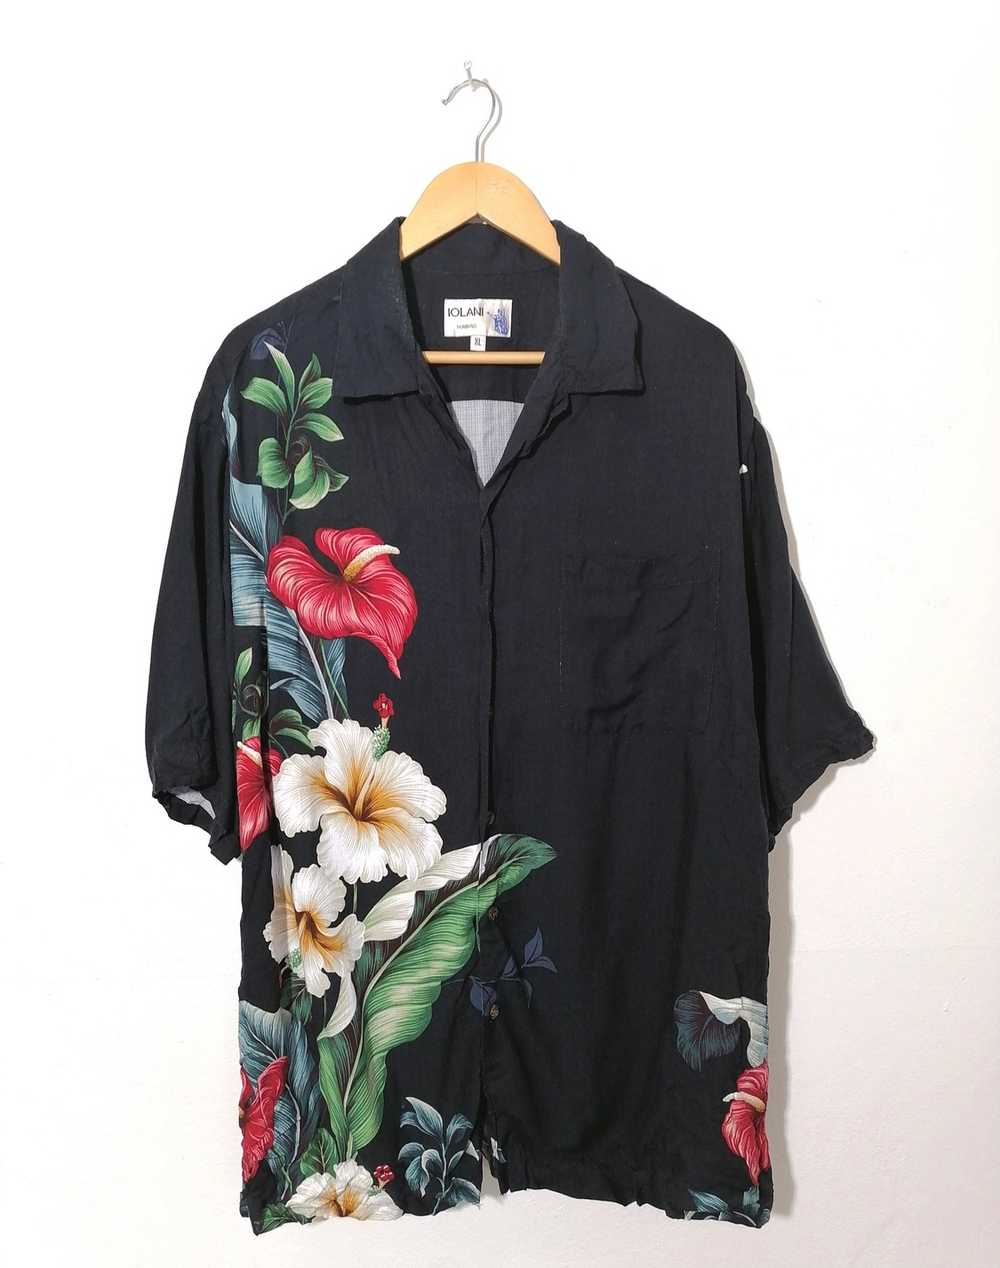 Iolani Made In USA Floral Hawaiian Buttons Shirt - image 1